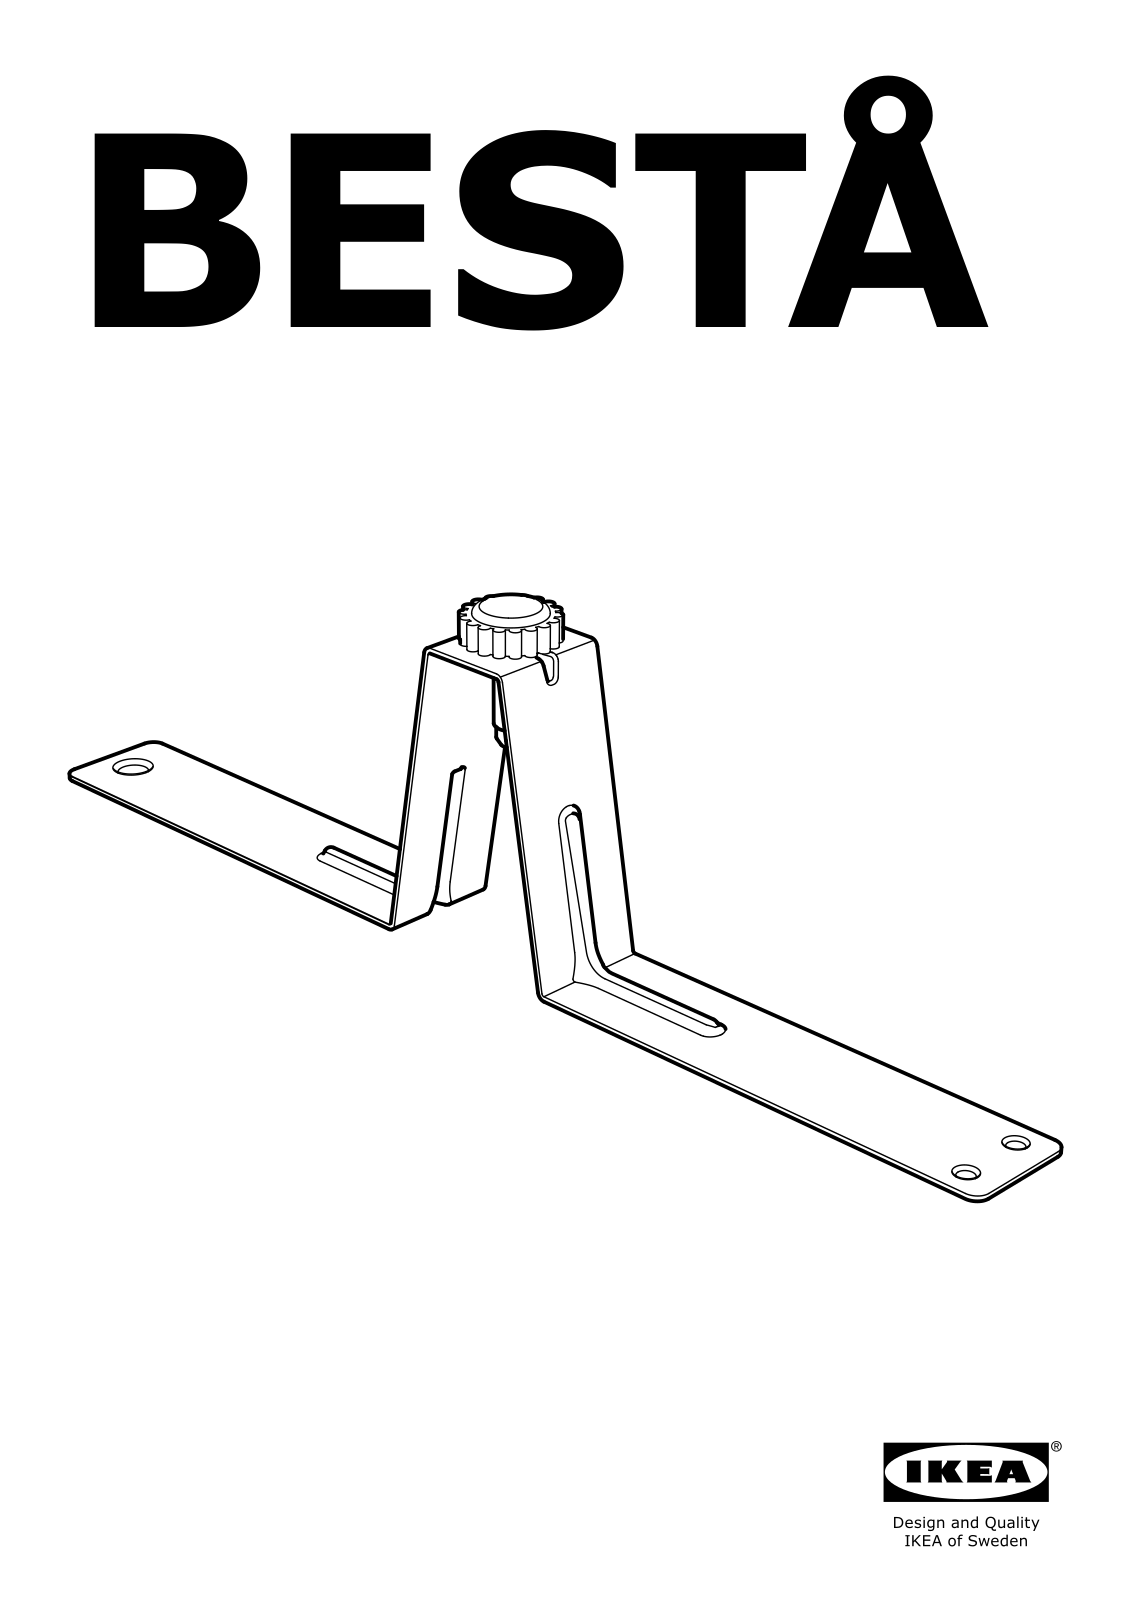 Ikea S49061228, S49098552, S49137469, S59084314, S59103954 Assembly instructions